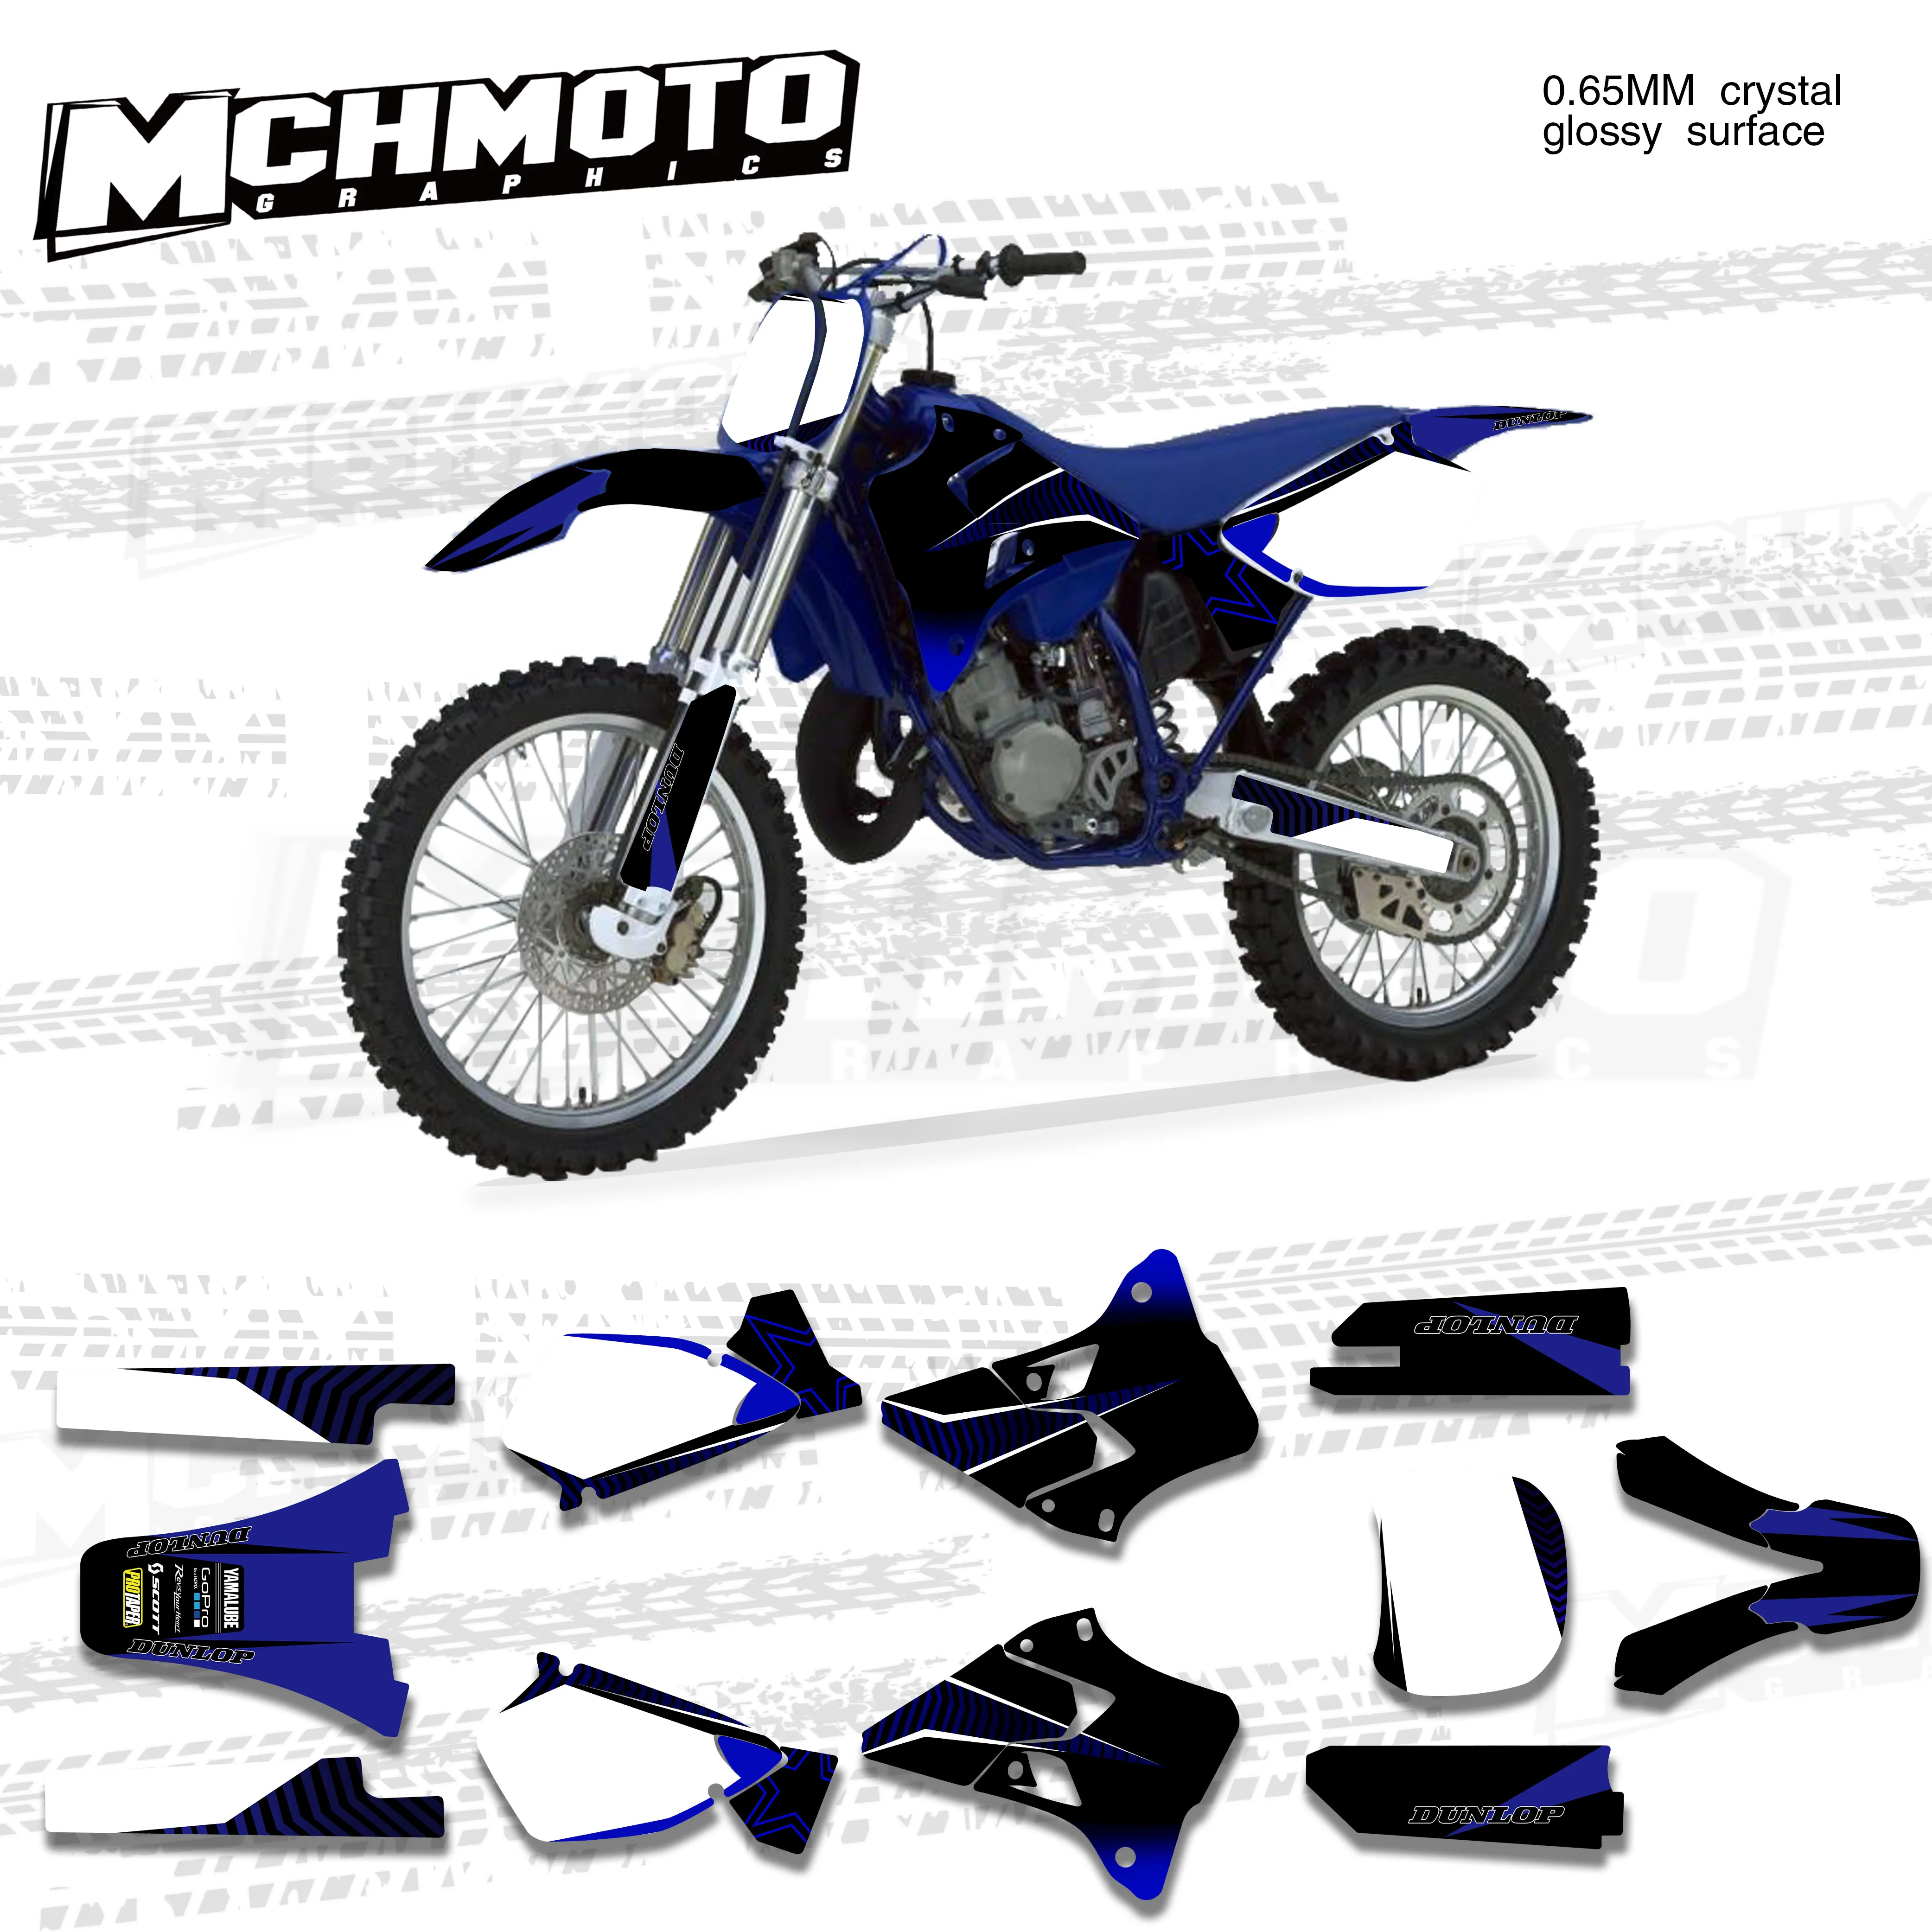 MCHMFG Graphic Background Sticker Decal for Yamaha YZ125 YZ250 YZ 125 250 1996 1997 1998 1999 2000 2001 Dirt Bike Stickers